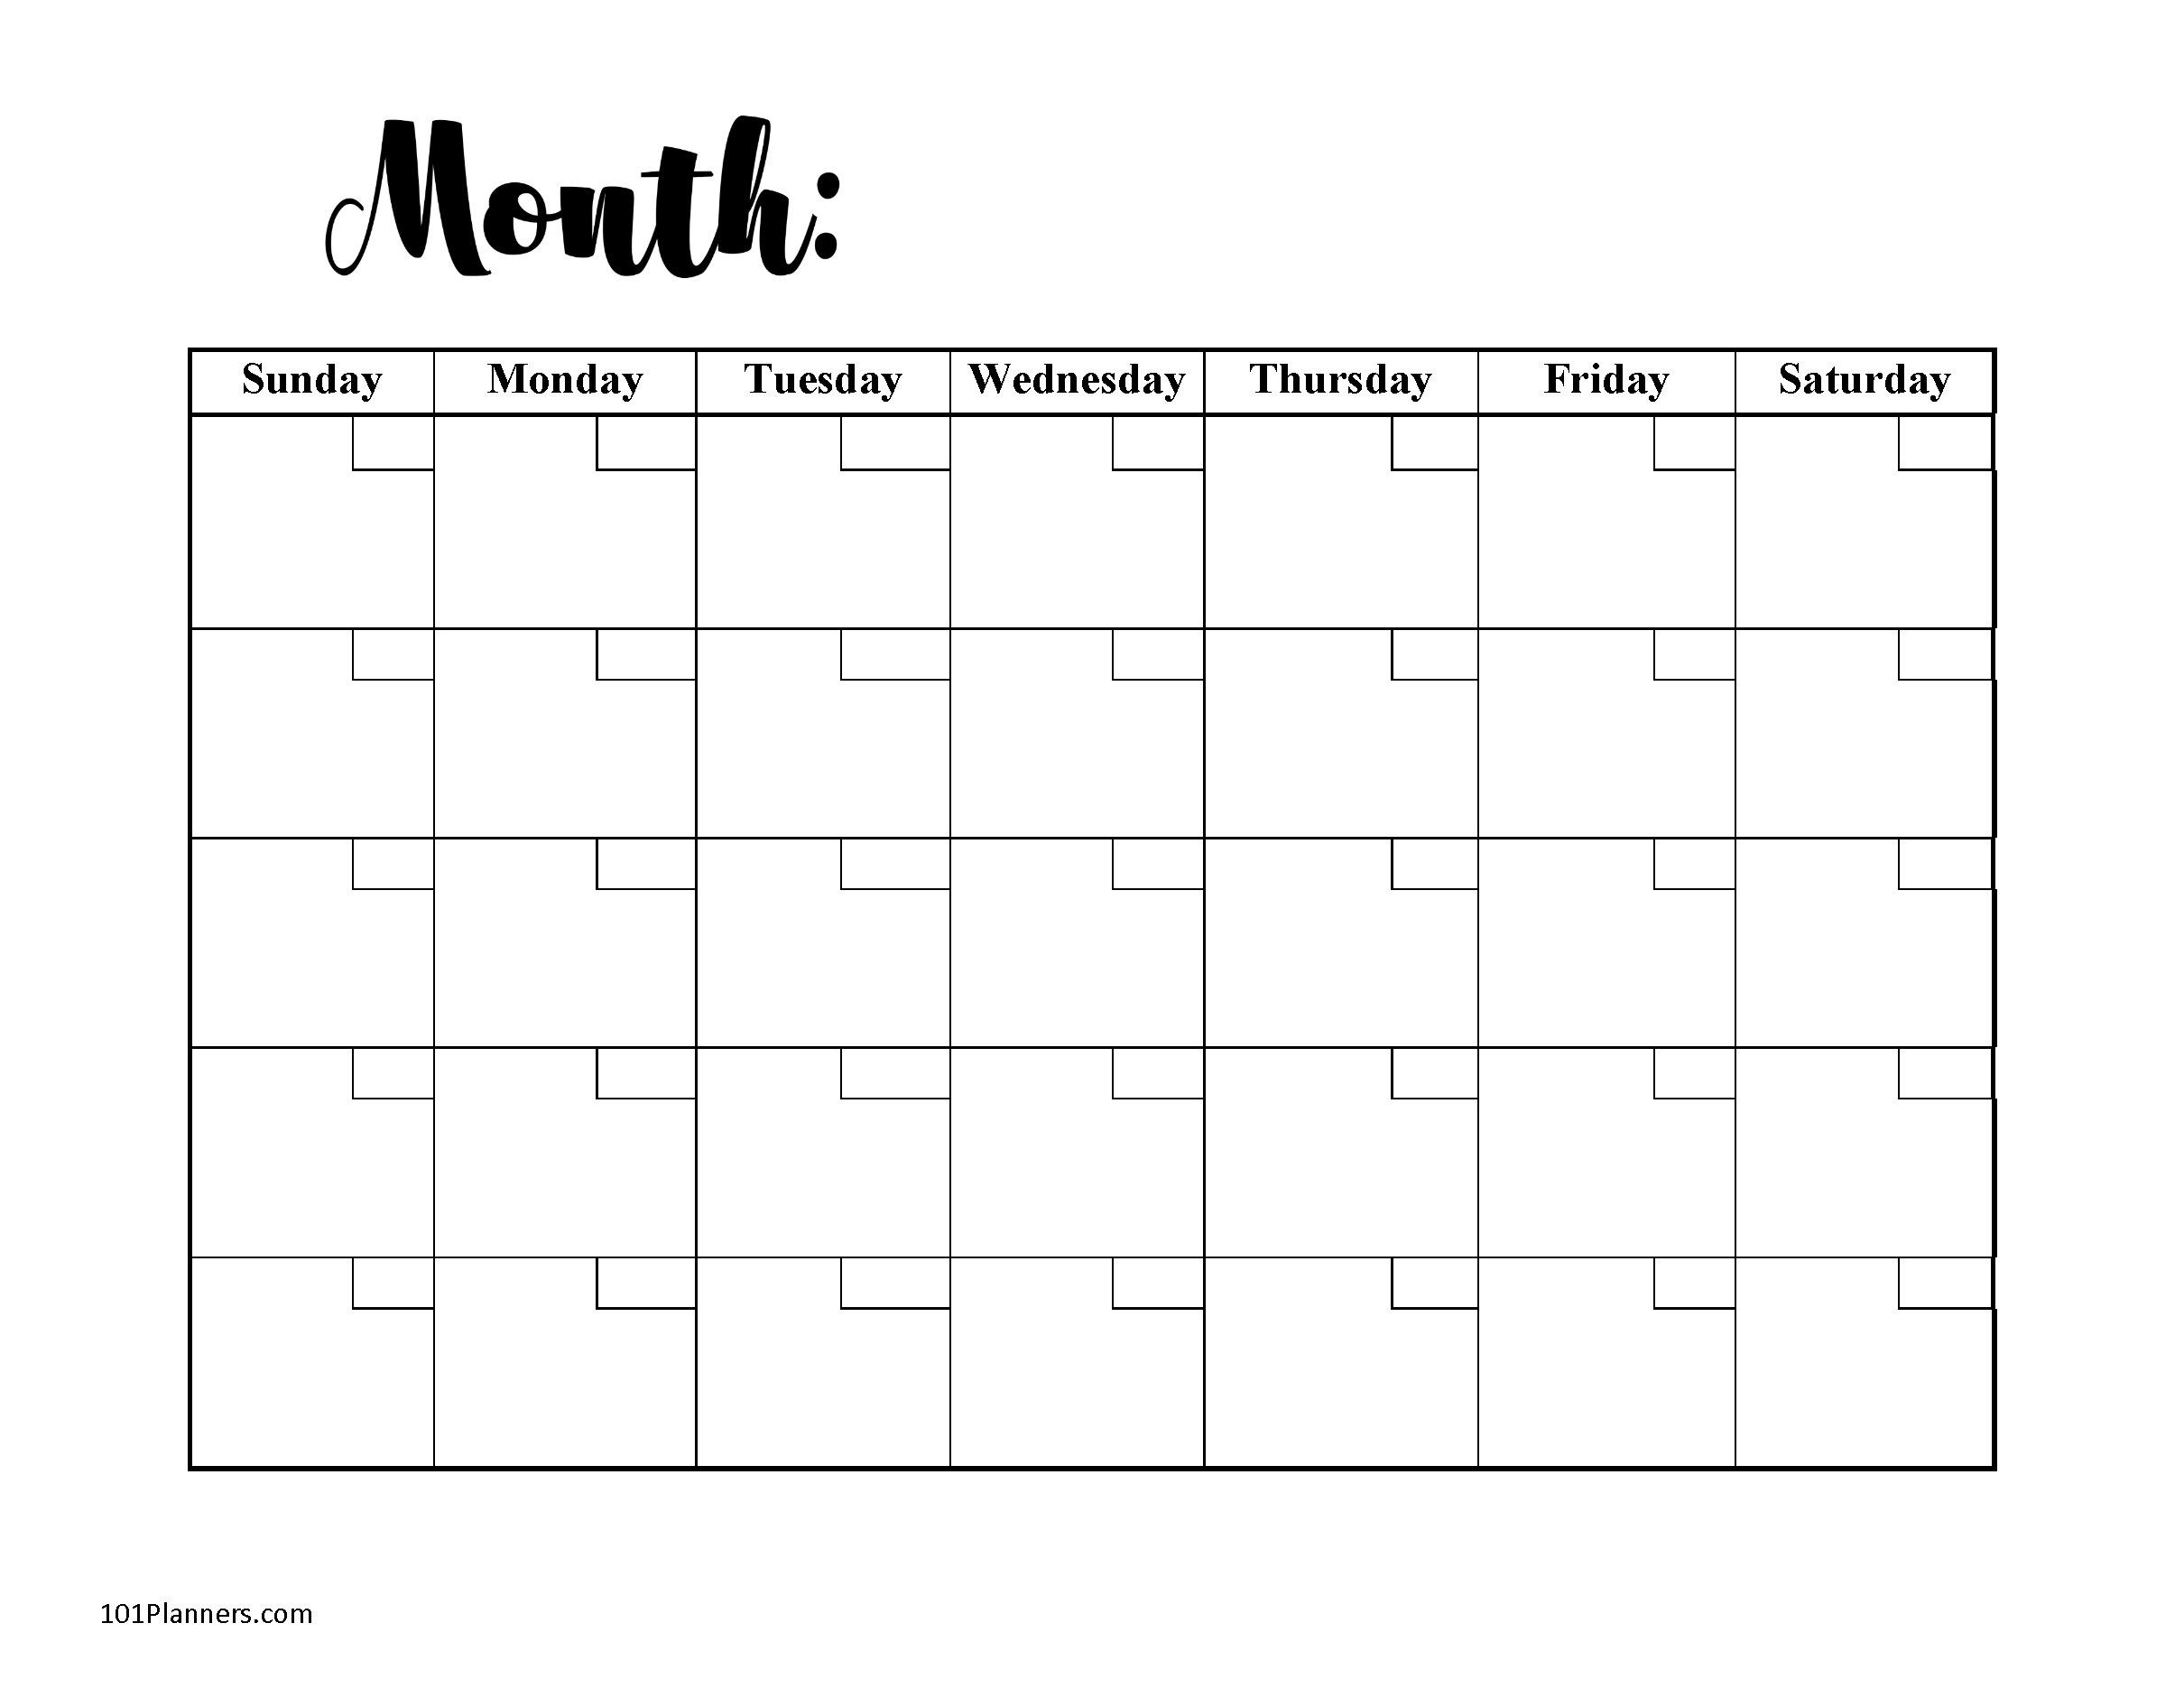 Blank Calendar With No Dates - Example Calendar Printable 4 Weekly Calander Editable